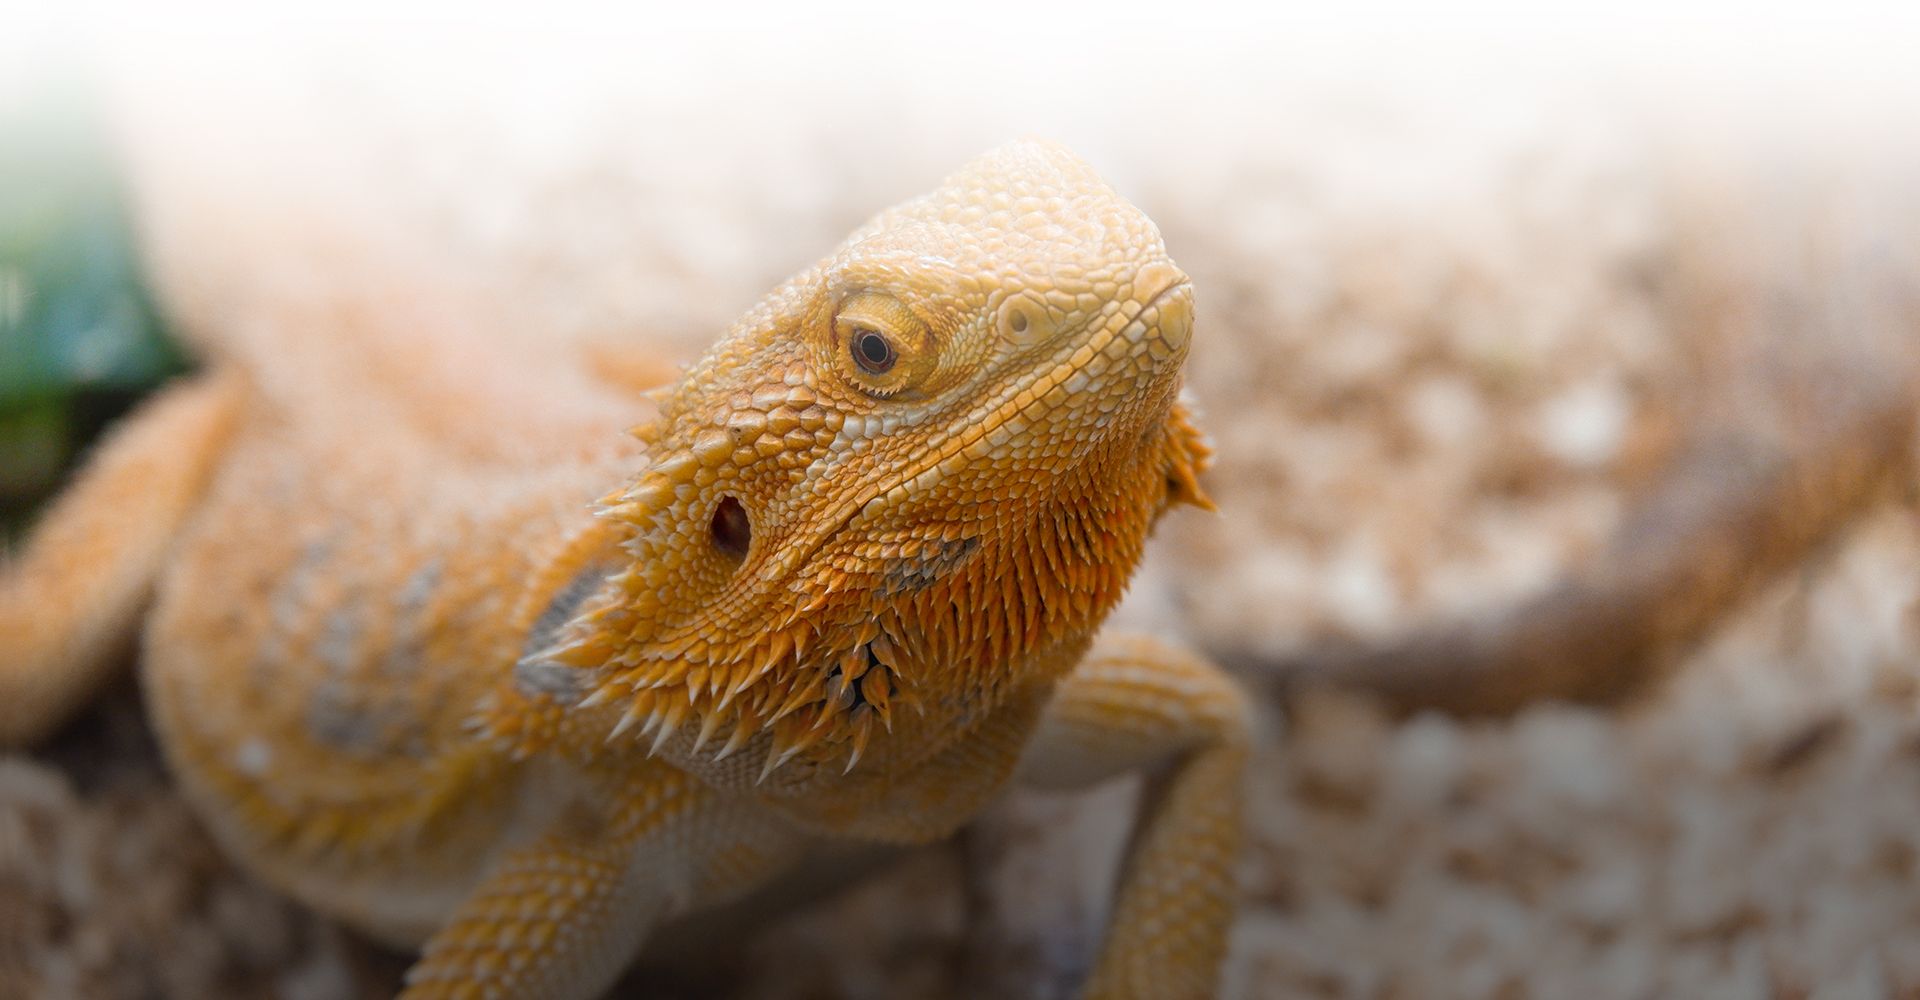 yellow bearded dragon pogona vitticeps lizard looking at the camera close up at veterinary care unlimited